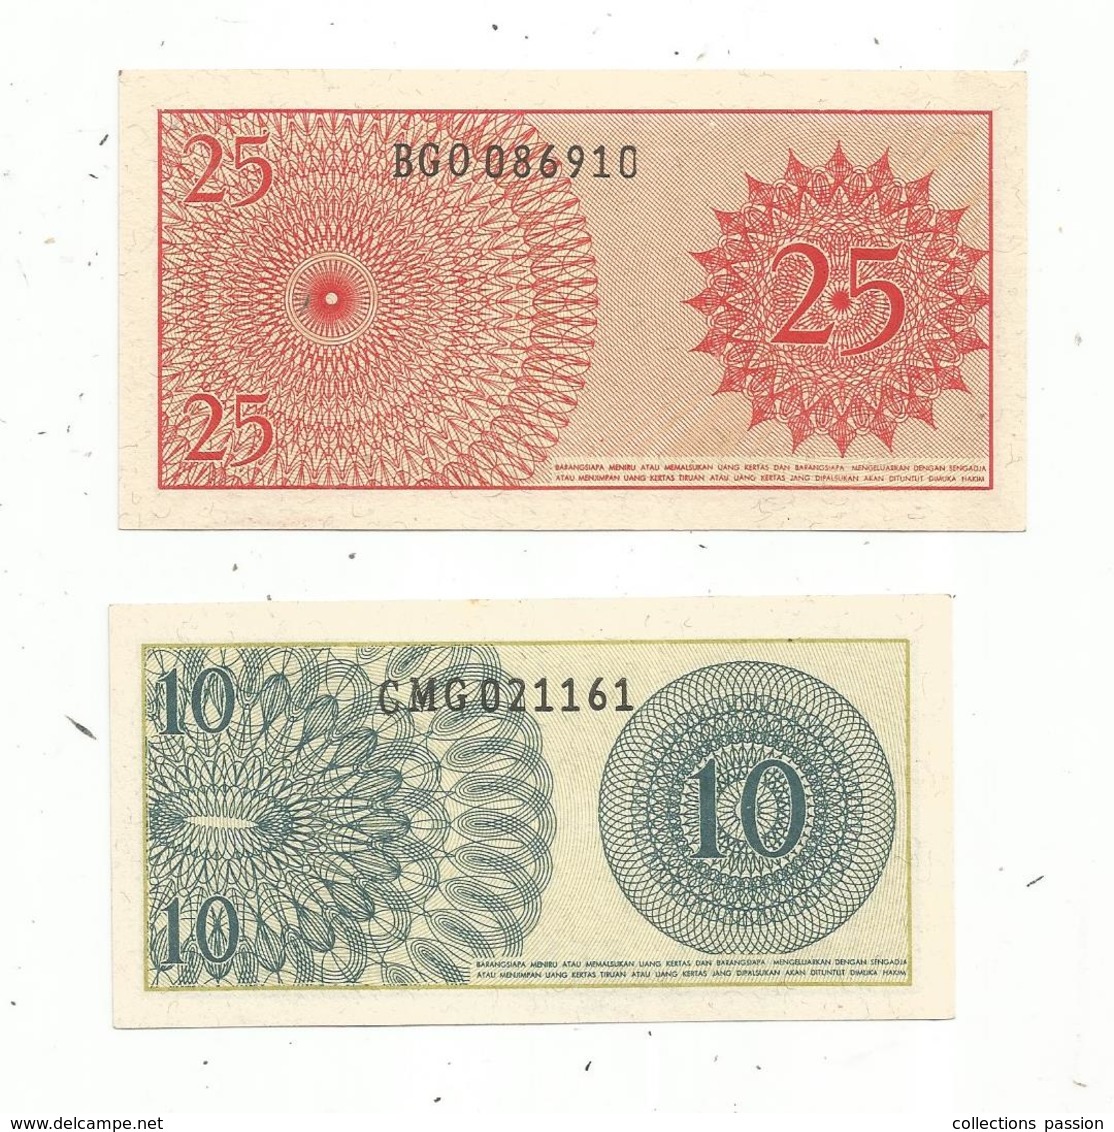 Billet , Bank INDONESIA , 10 Et 25 Sen ,1964 ,  2 Scans , Unc  LOT DE 2 BILLETS - Indonésie